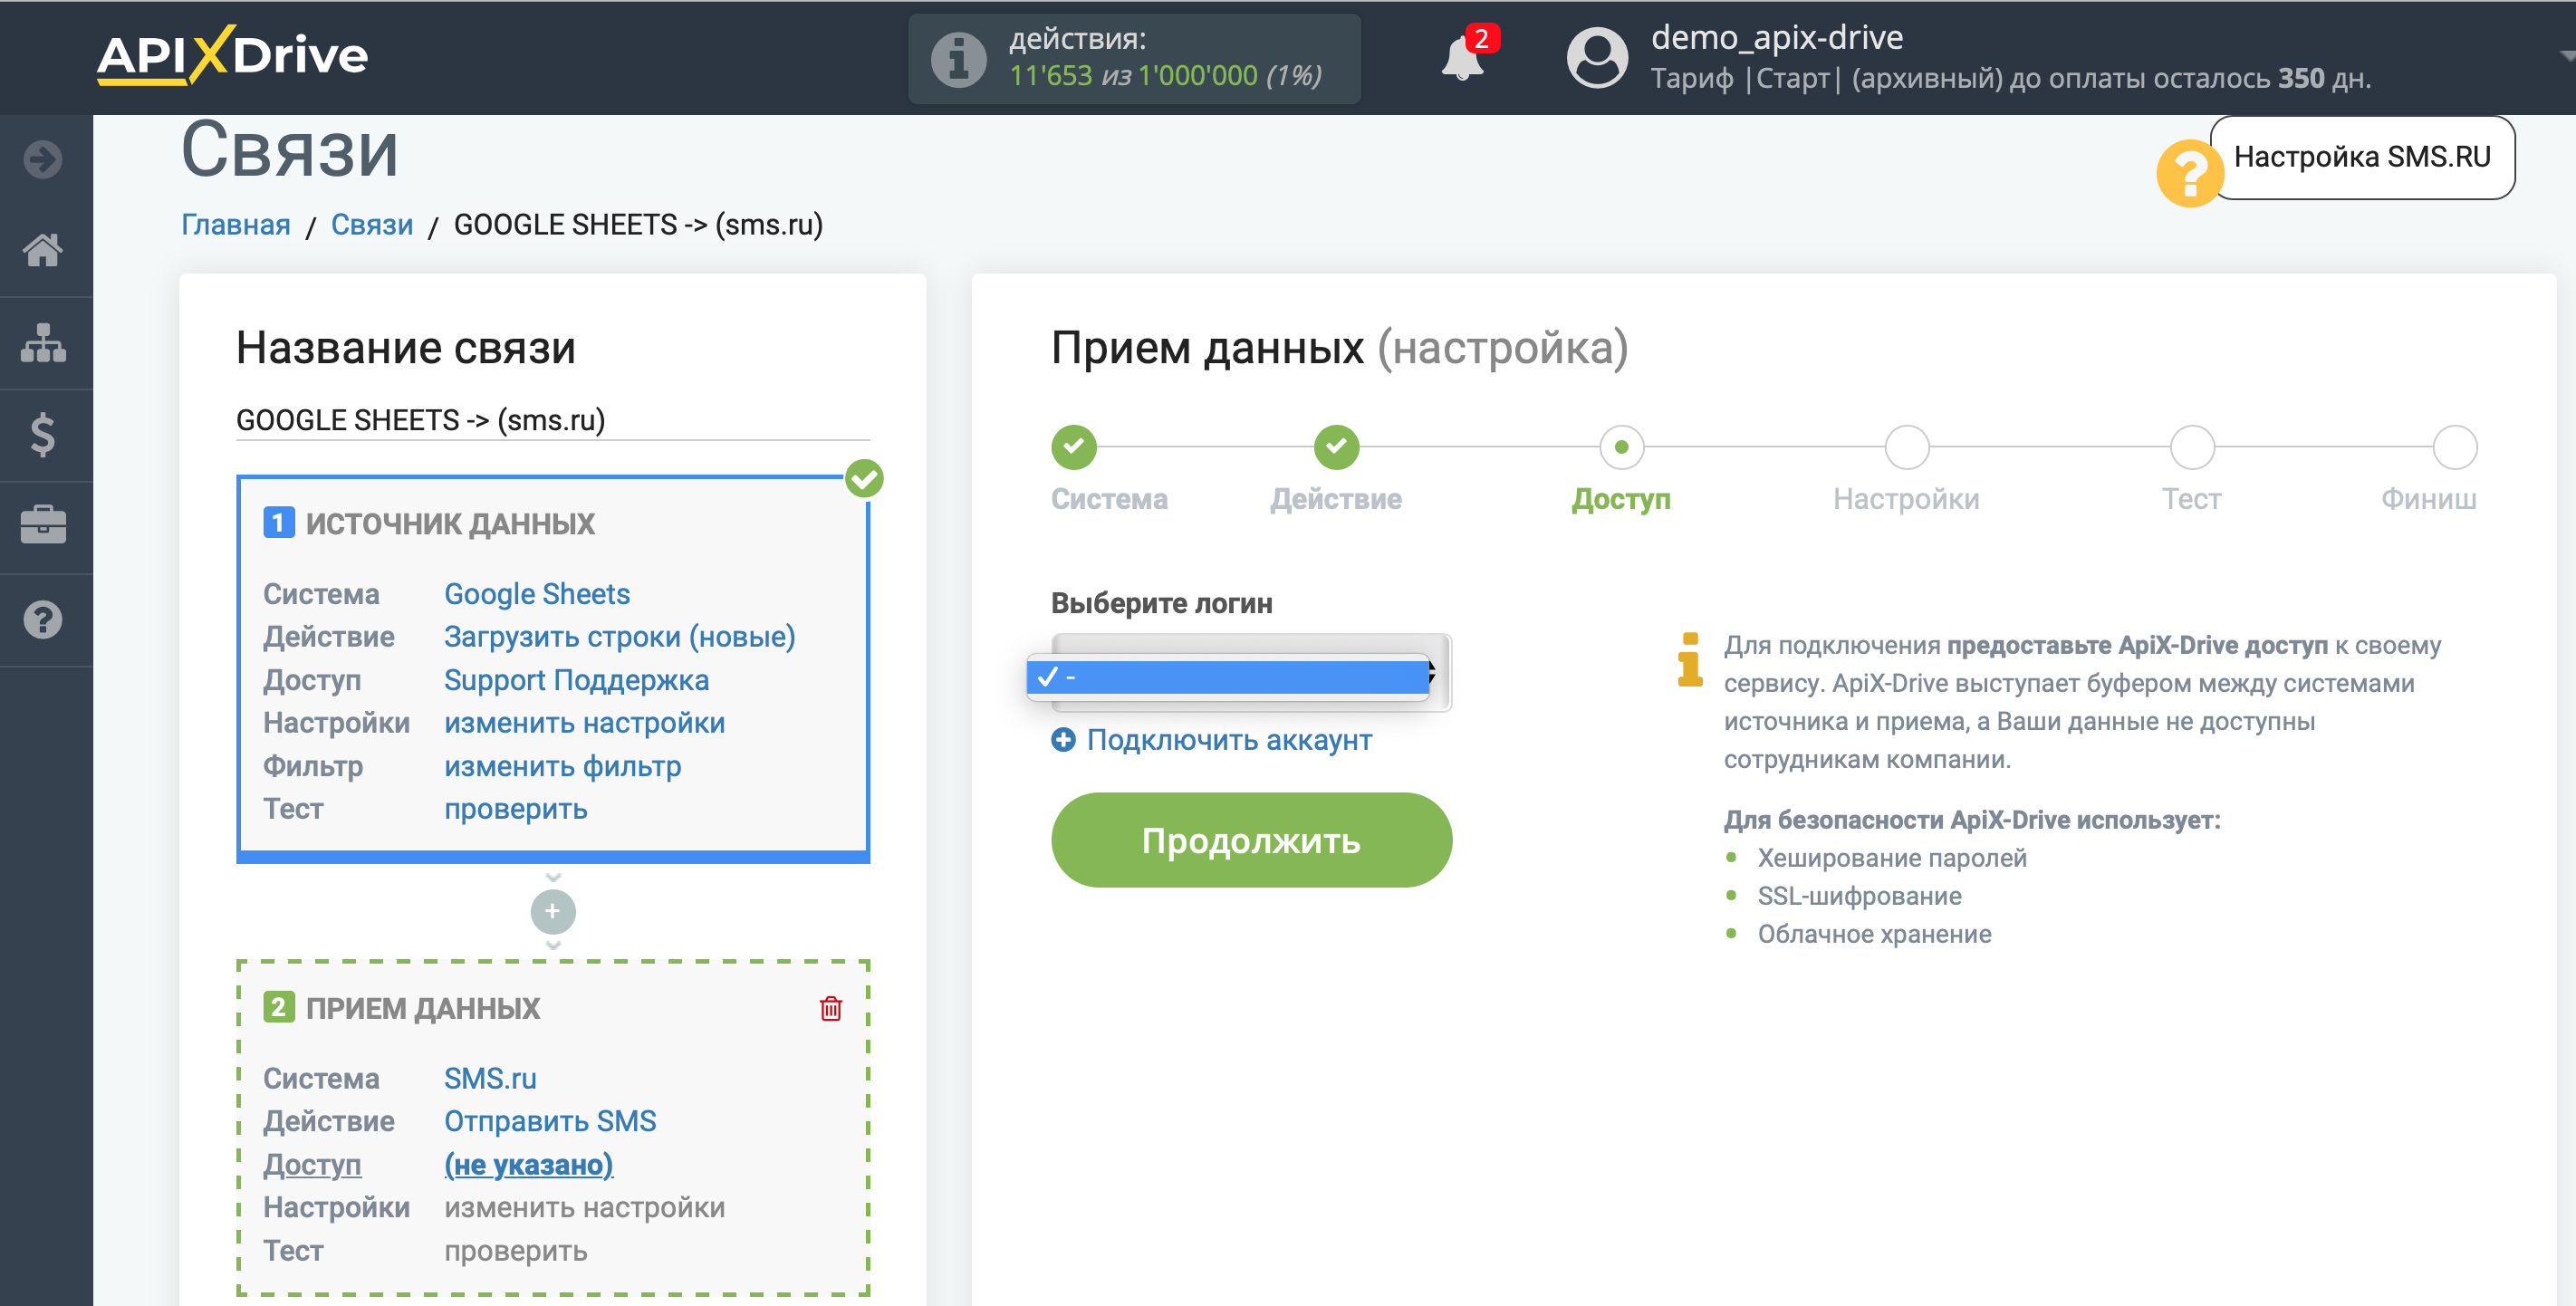 Настройка Приема данных в SMS.ru | Подключение аккаунта